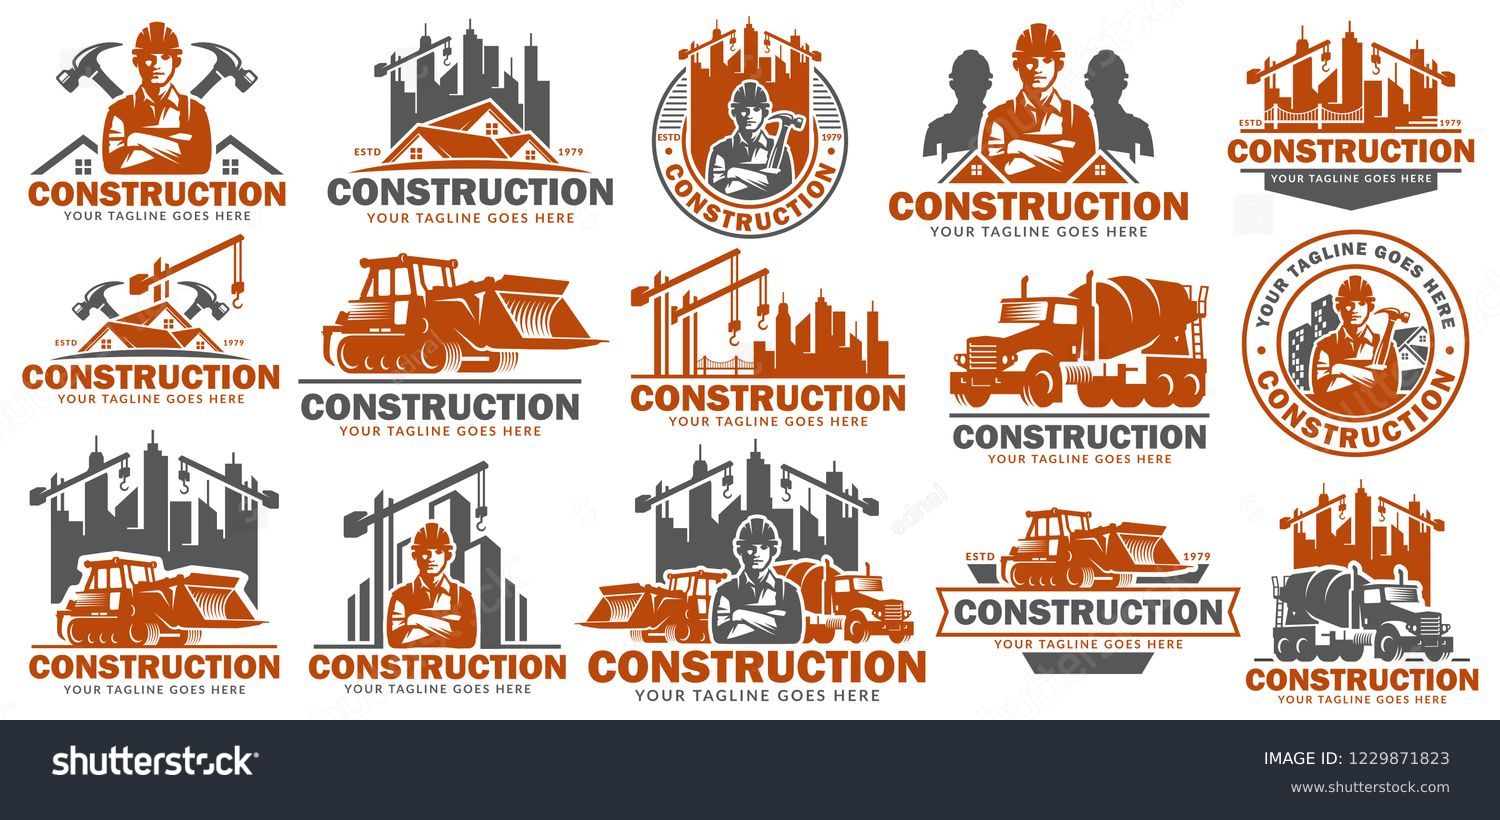 Construction logo template set, logo pack, logo bundles, vector pack of Construction logo, easy to edit